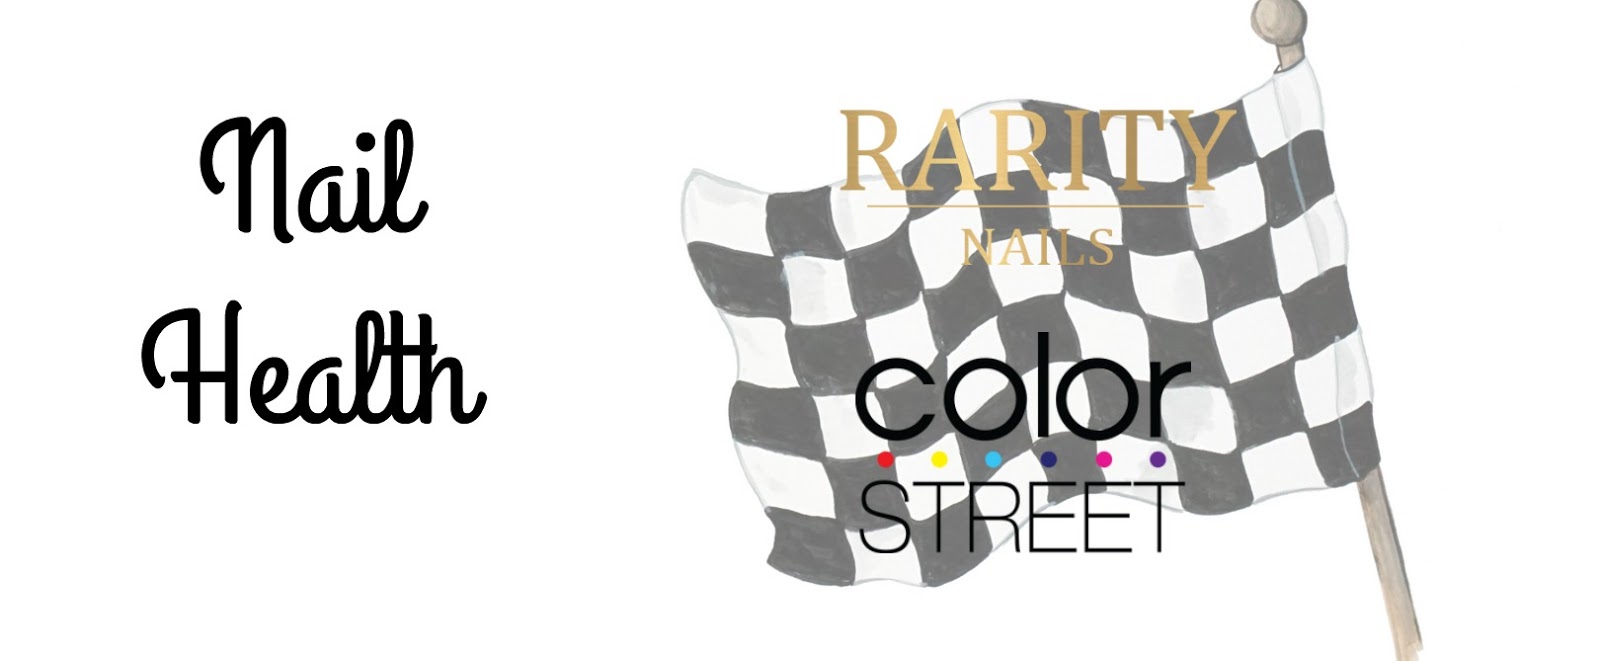 We Took the Color Street Challenge - Splendry